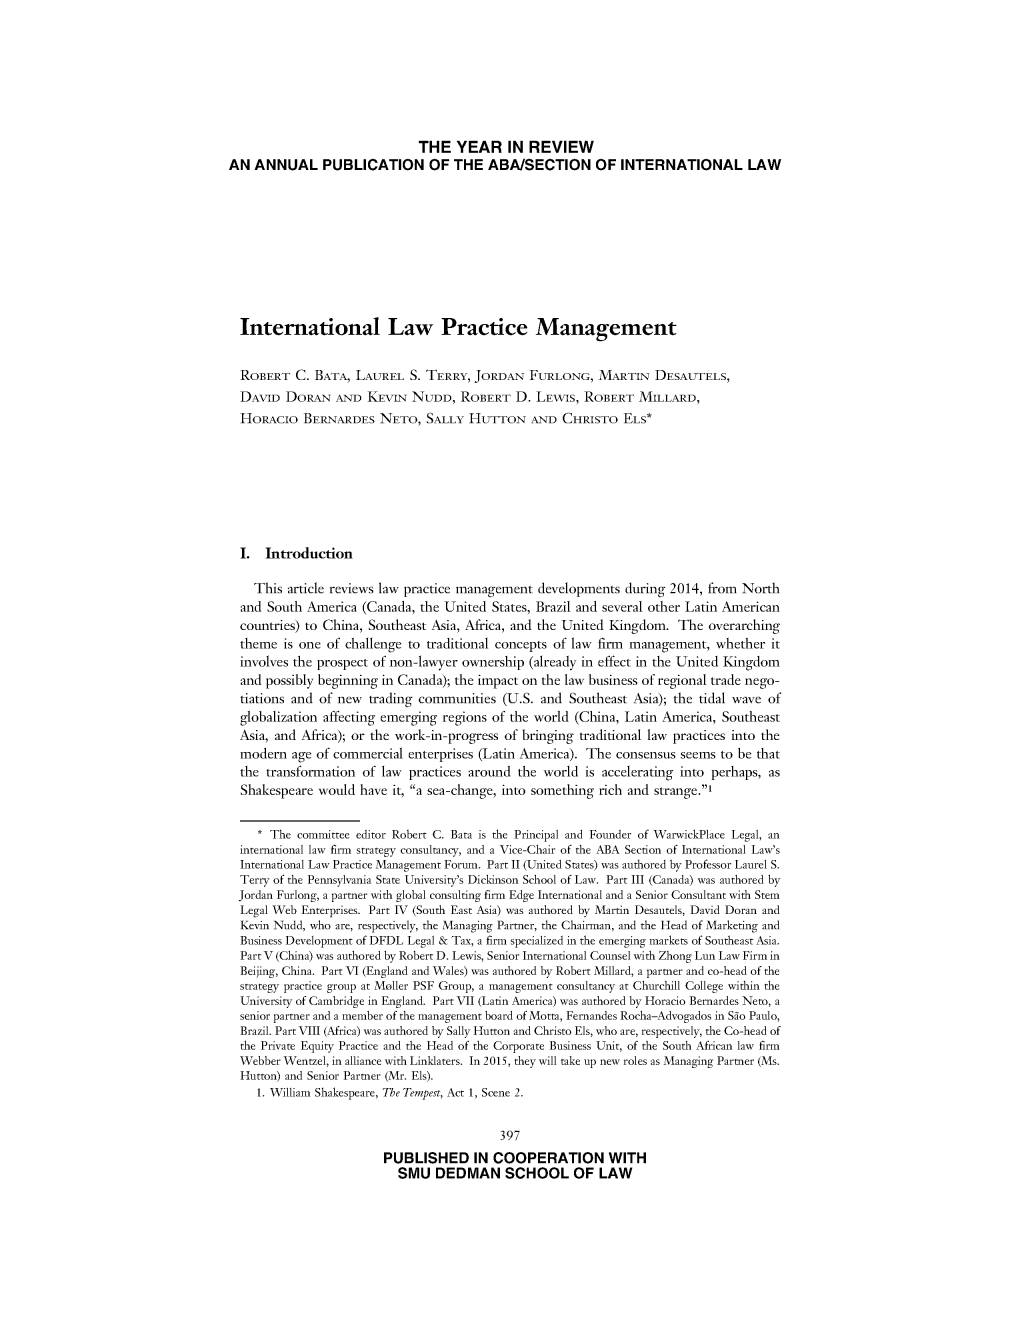 International Law Practice Management